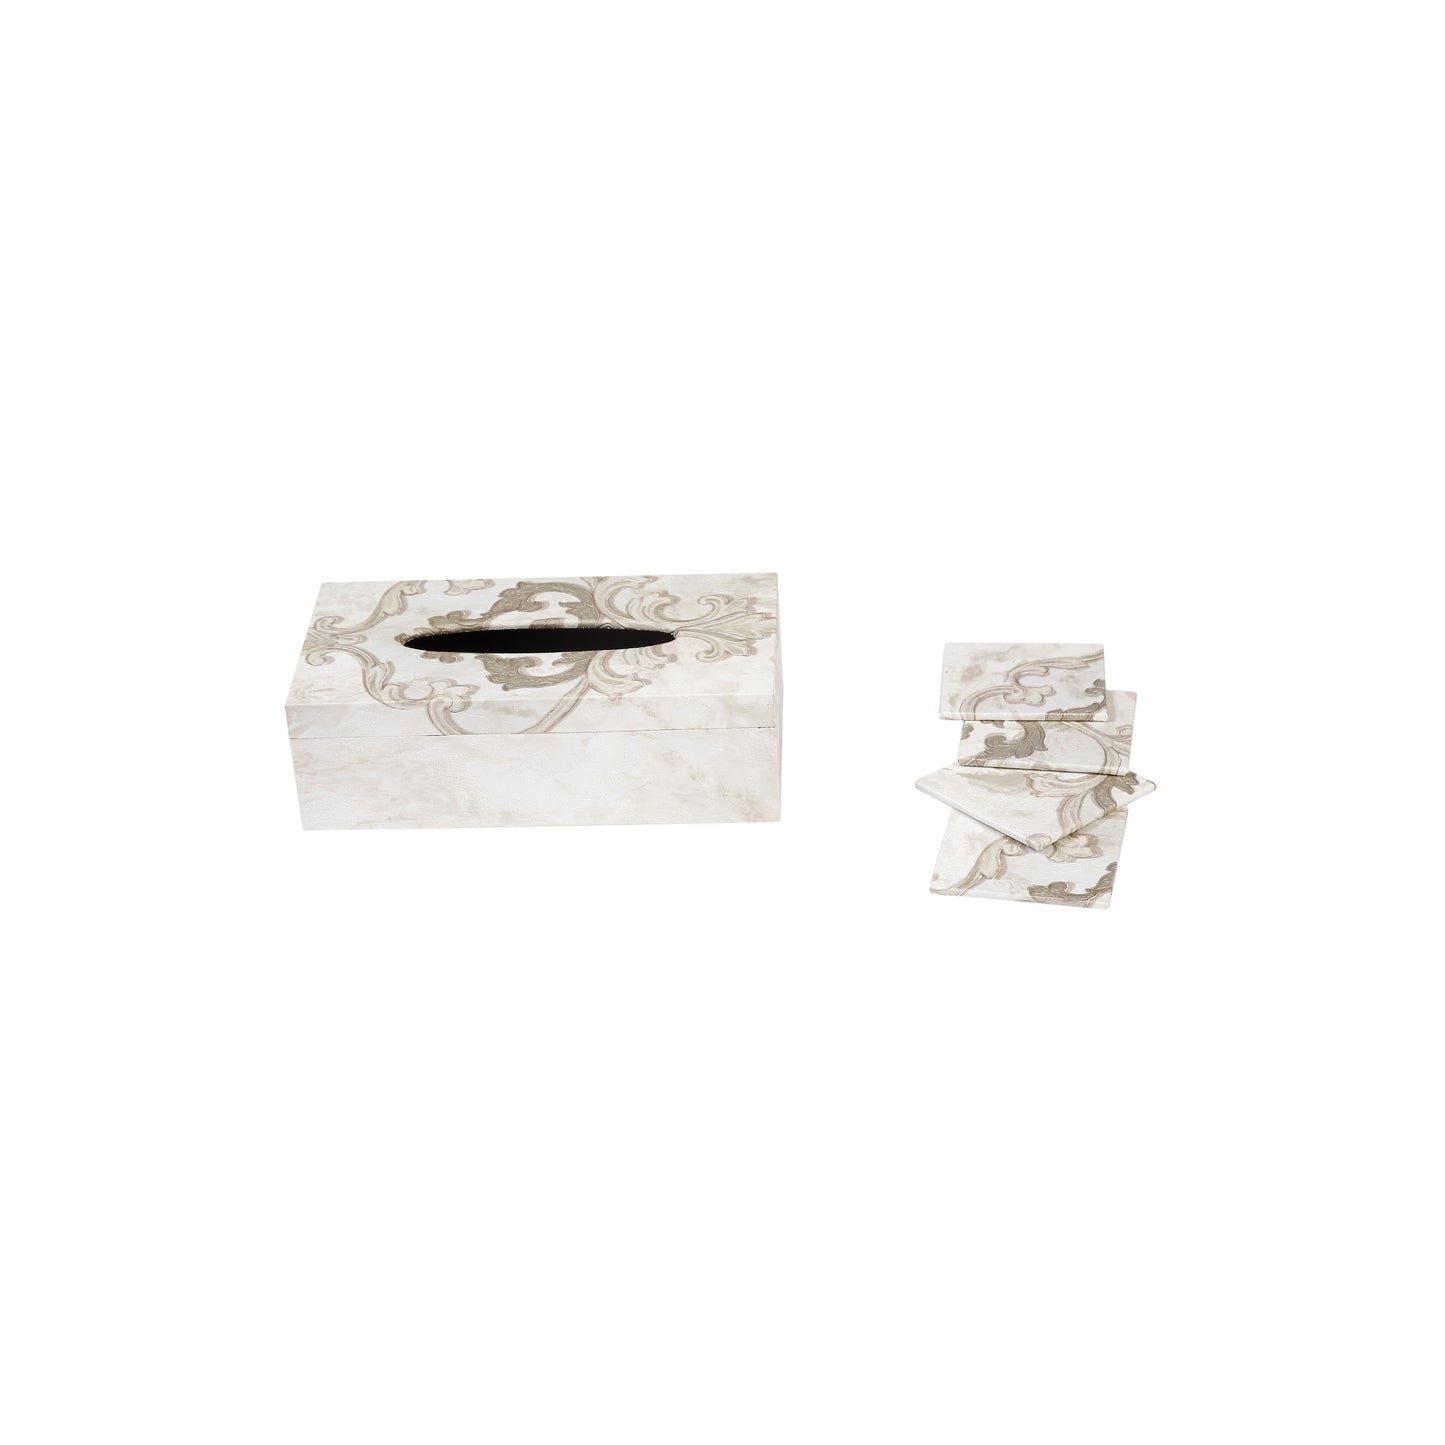 A Tiny Mistake Royal Marble Motifs Rectangle Tissue Box, 26 x 13 x 8 cm